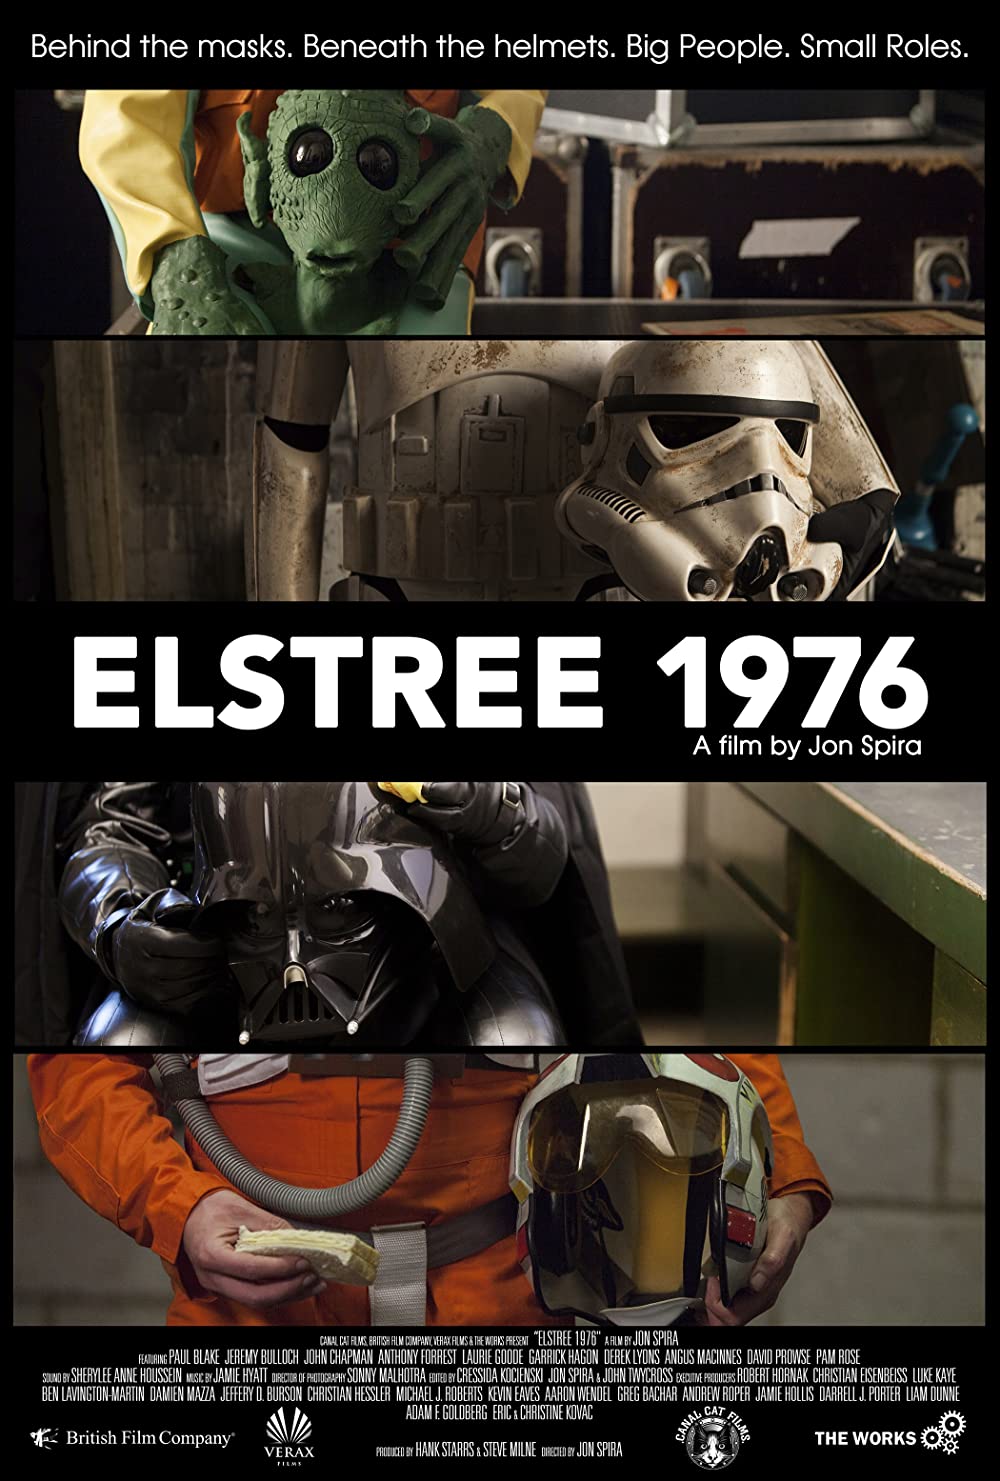 Filmbeschreibung zu Elstree 1976